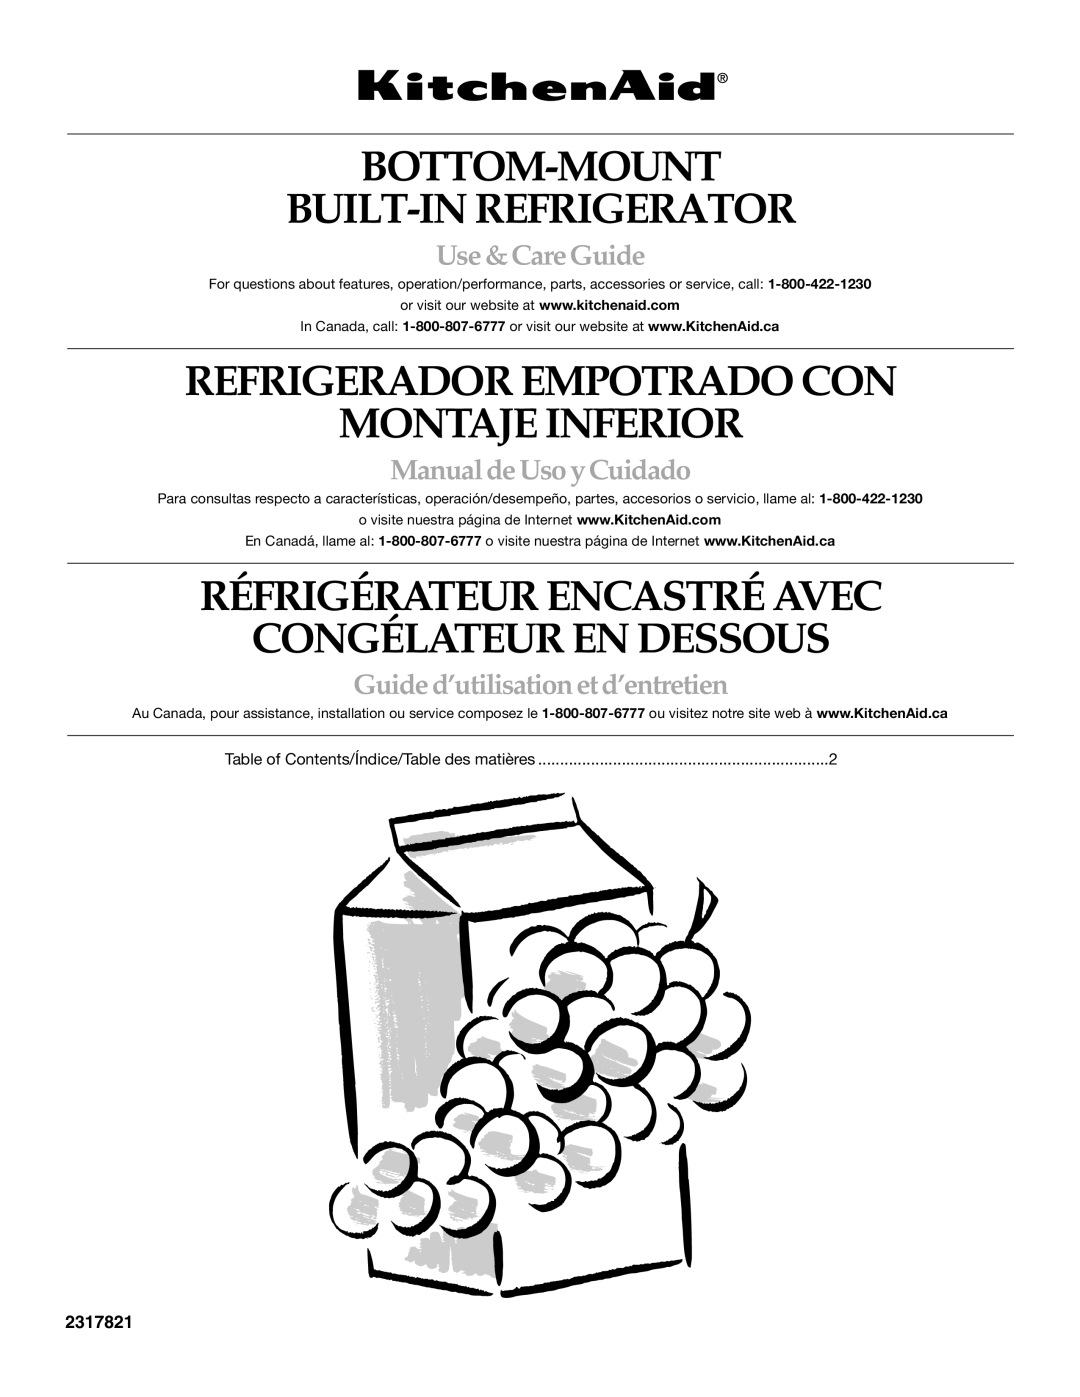 KitchenAid Bottom-Mount Built-In Refrigerator manual BOTTOM-MOUNT BUILT-IN Refrigerator 